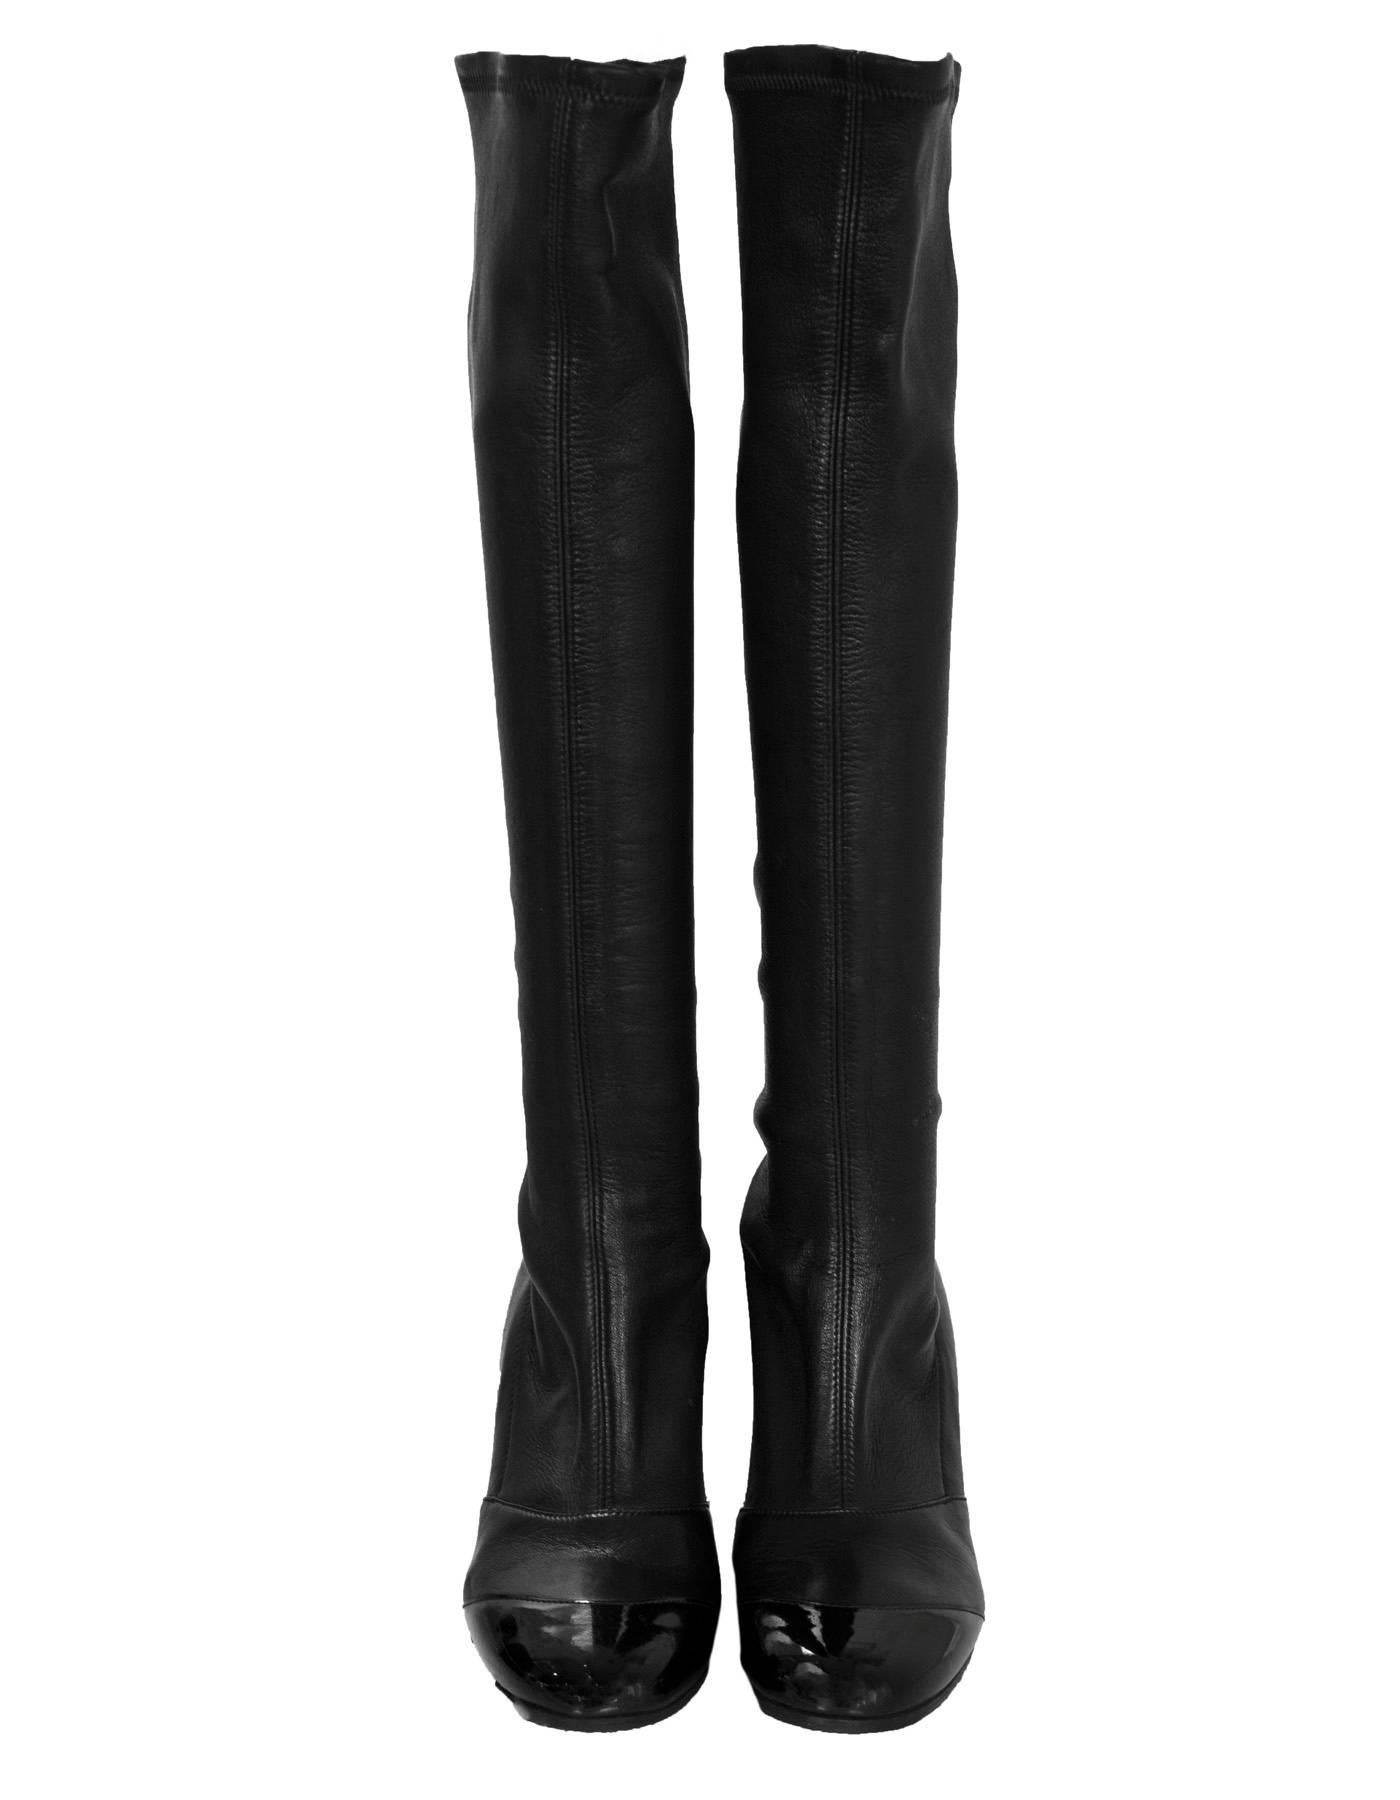 Chanel Black Leather & Patent Cap-Toe Boots Sz 38 1